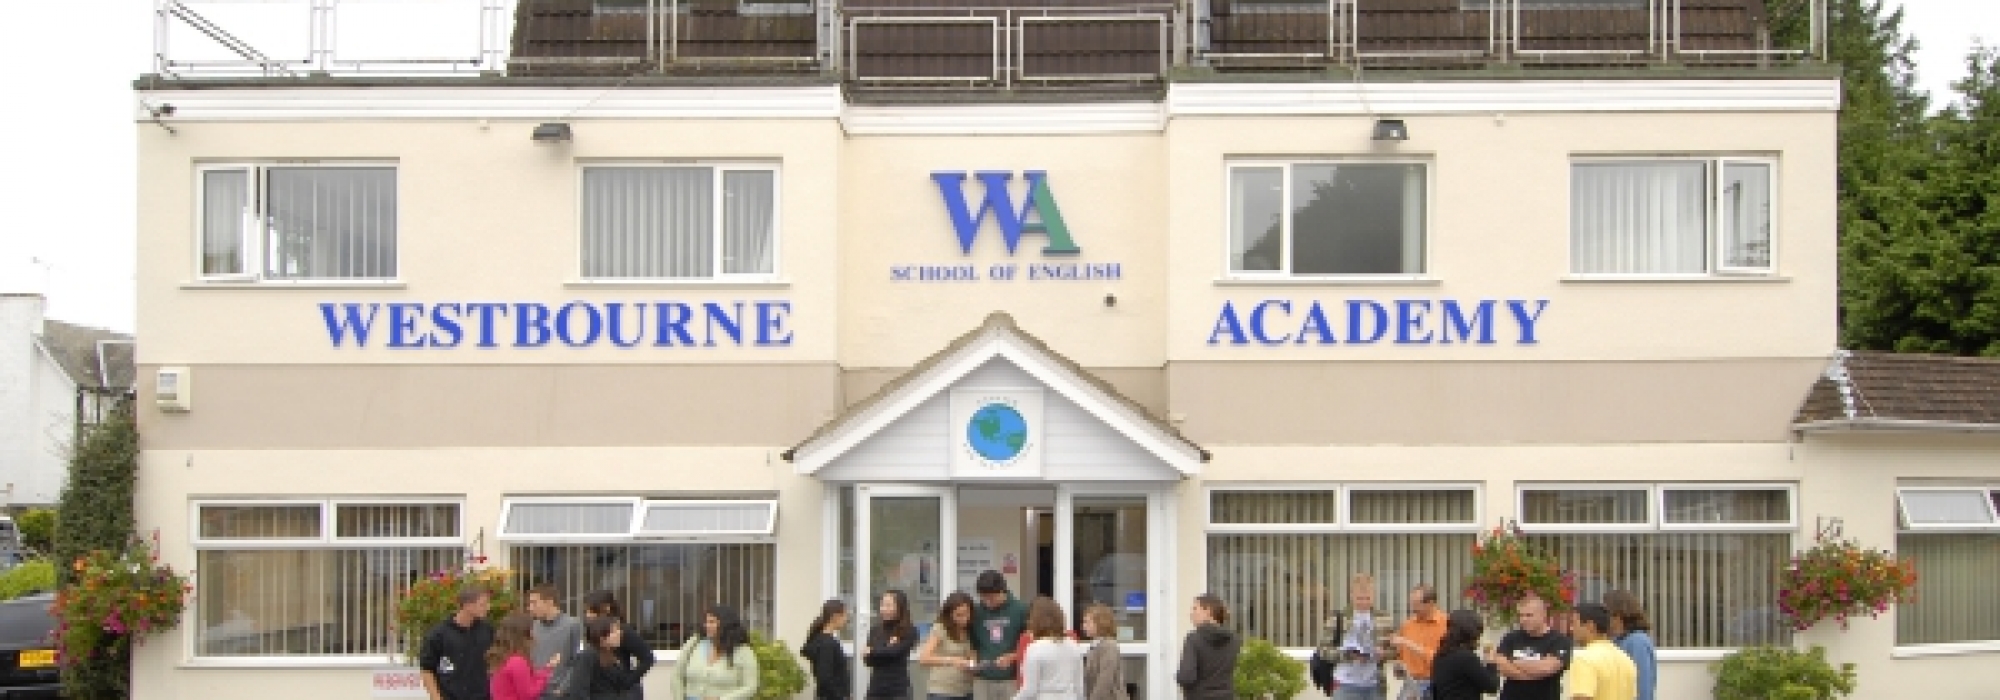 Westbourne Academy School of English